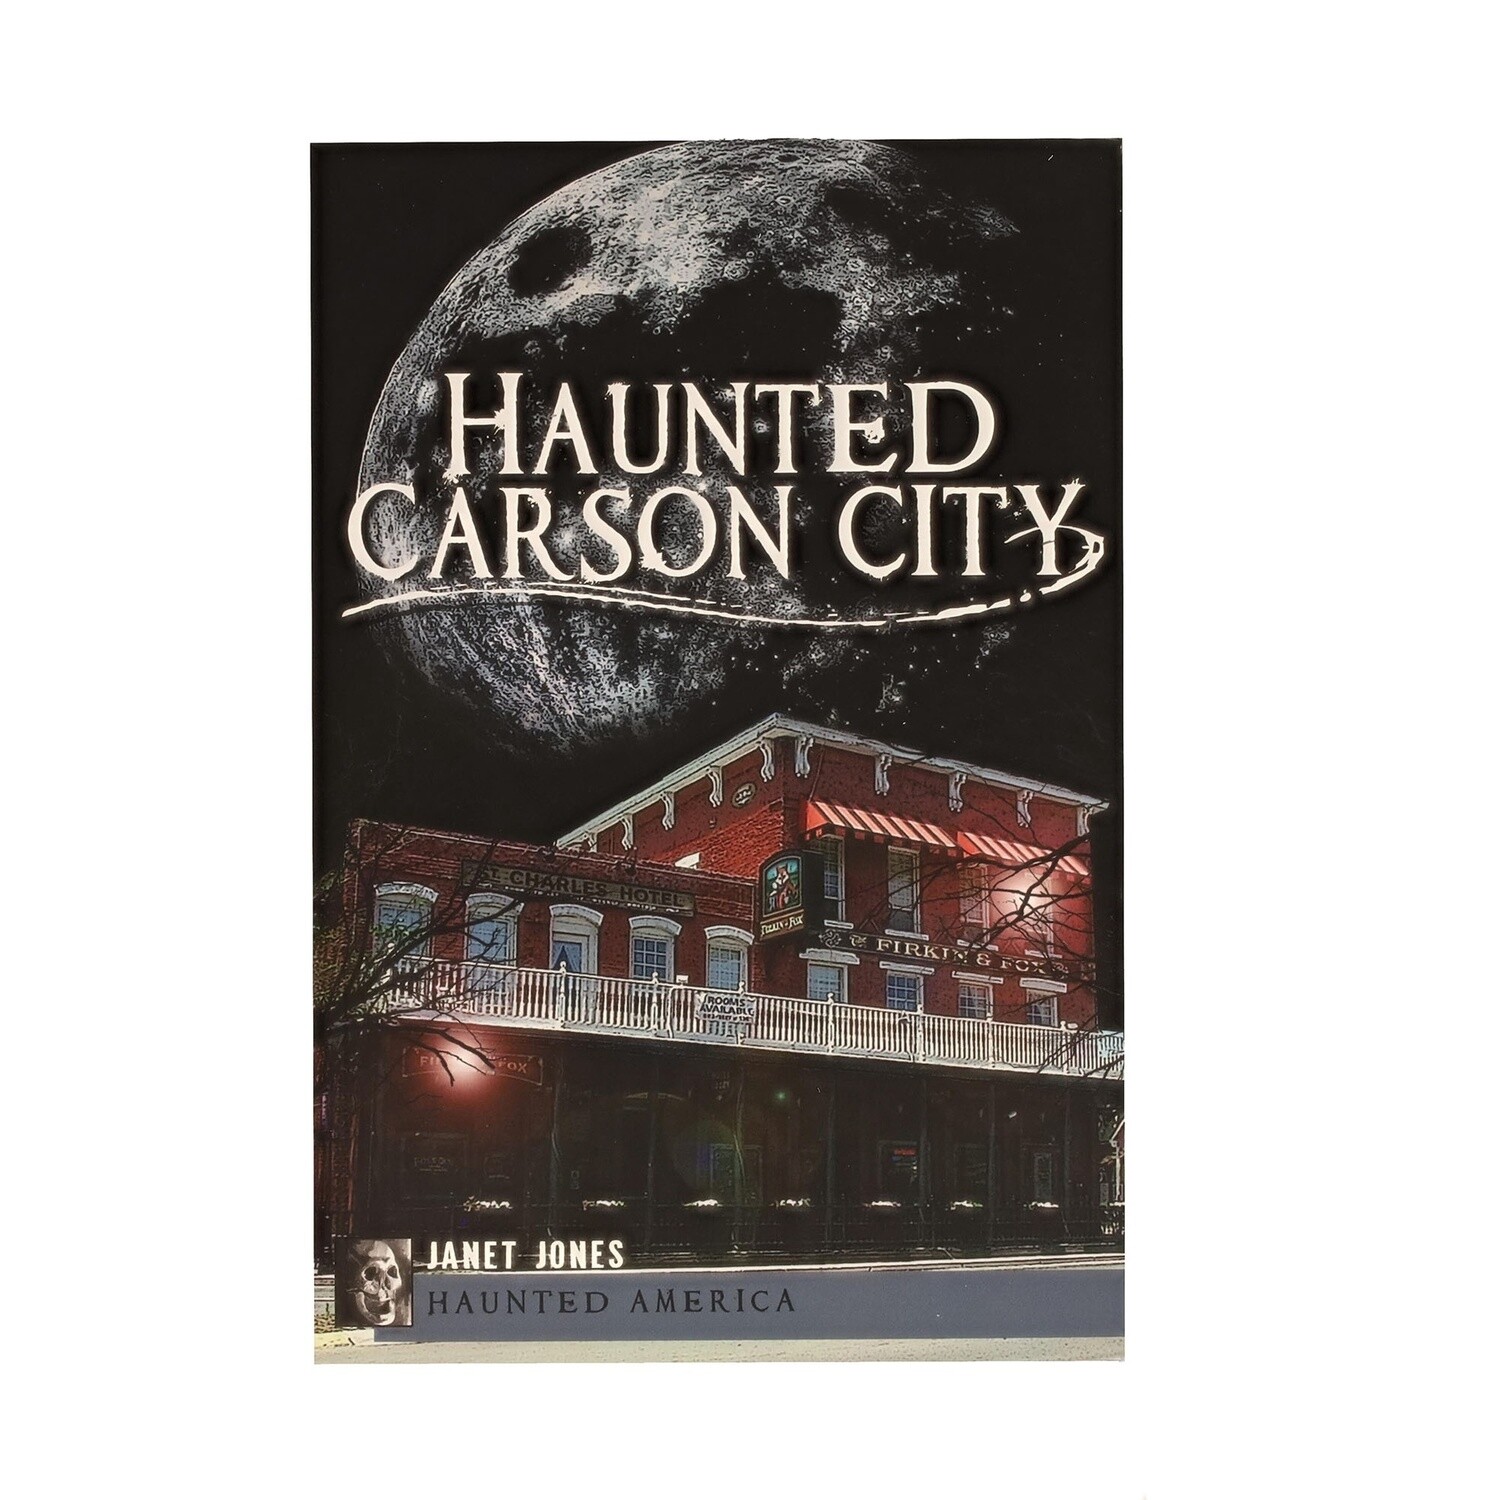 Haunted Carson City by Janet Jones